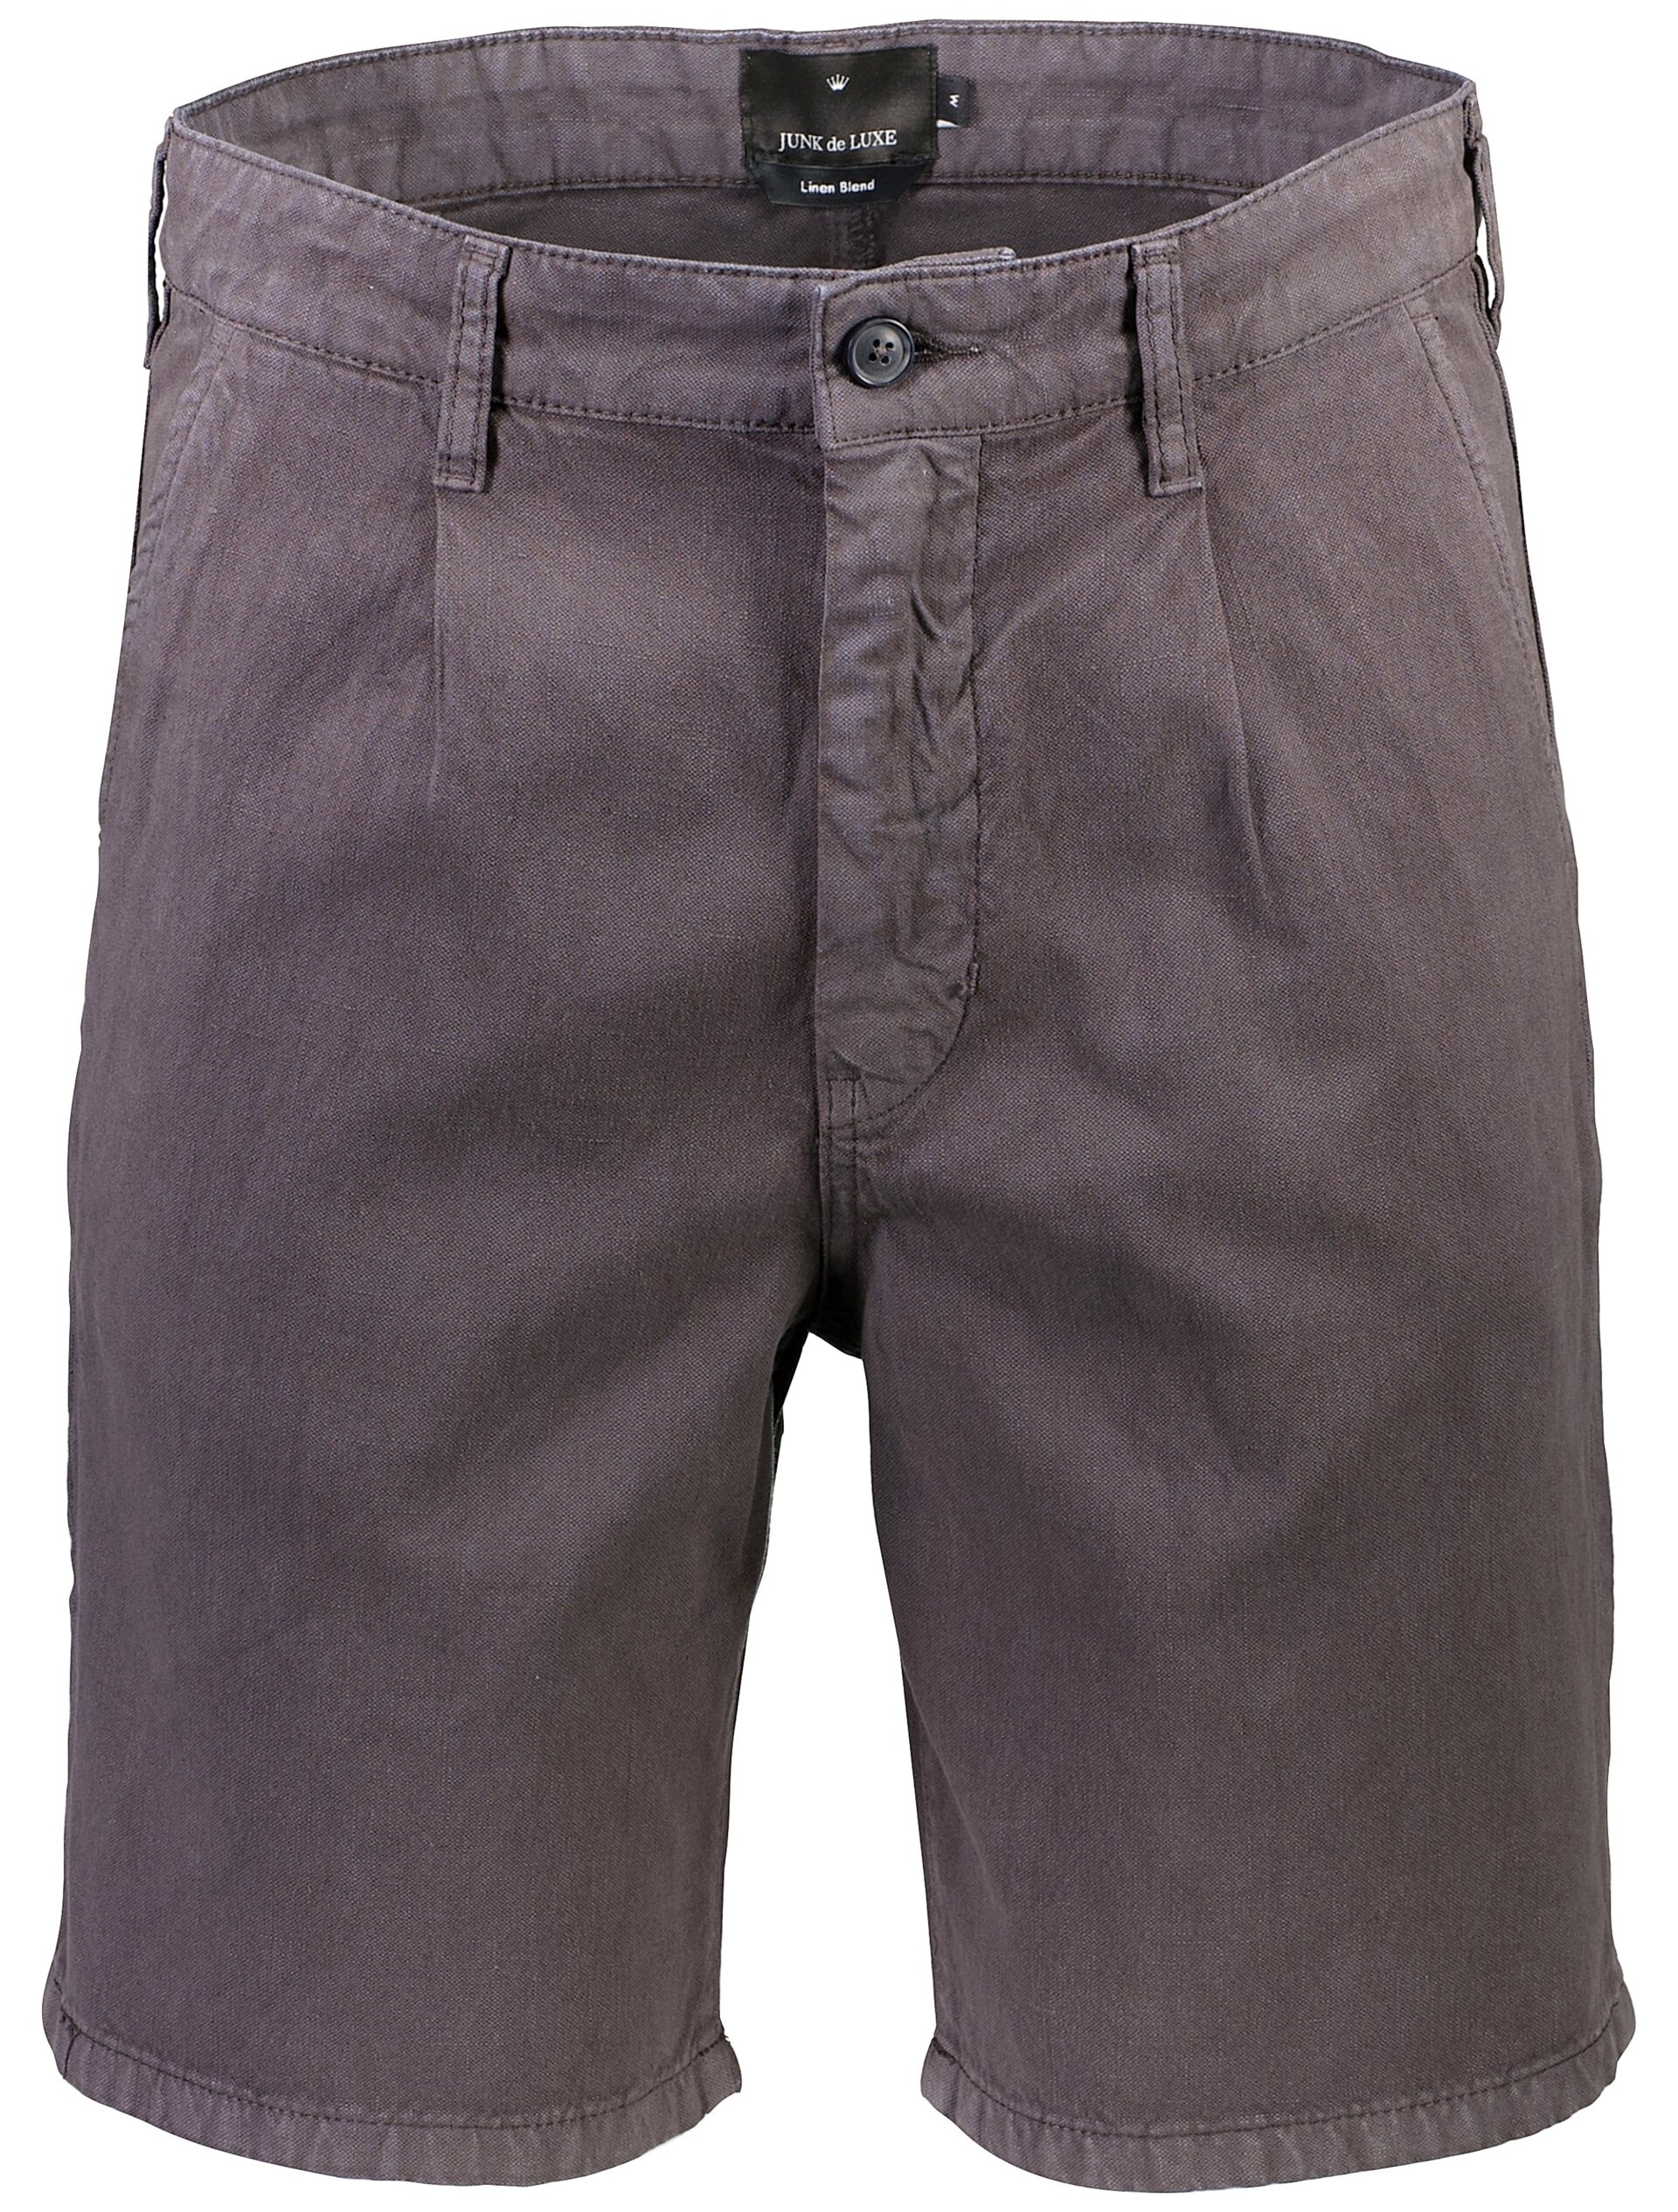 Junk de Luxe Linen shorts grey / charcoal